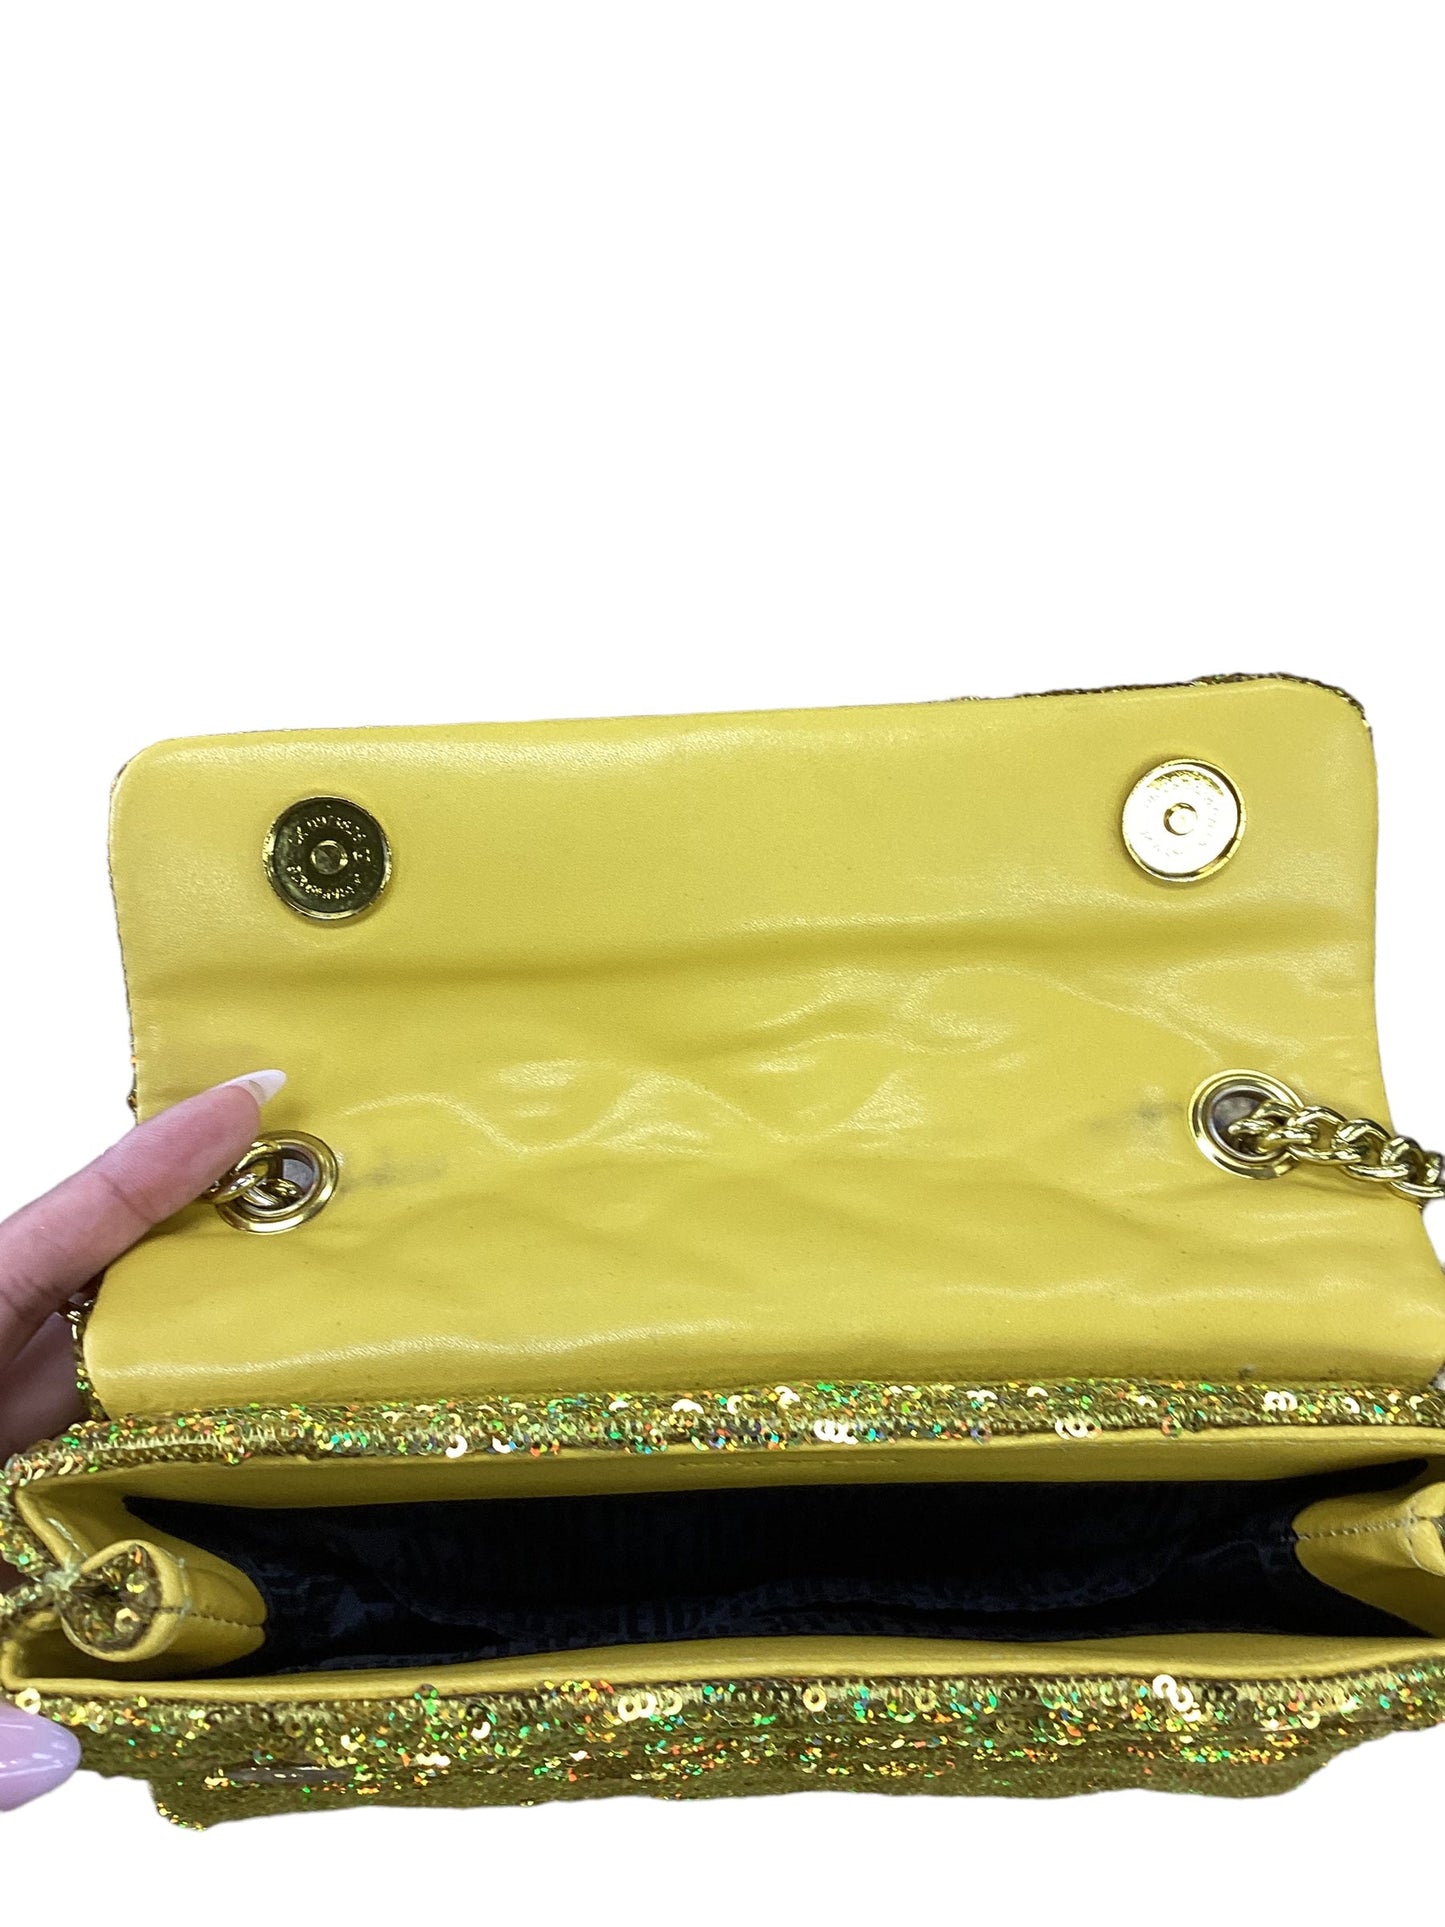 Handbag By Kurt Geiger  Size: Small